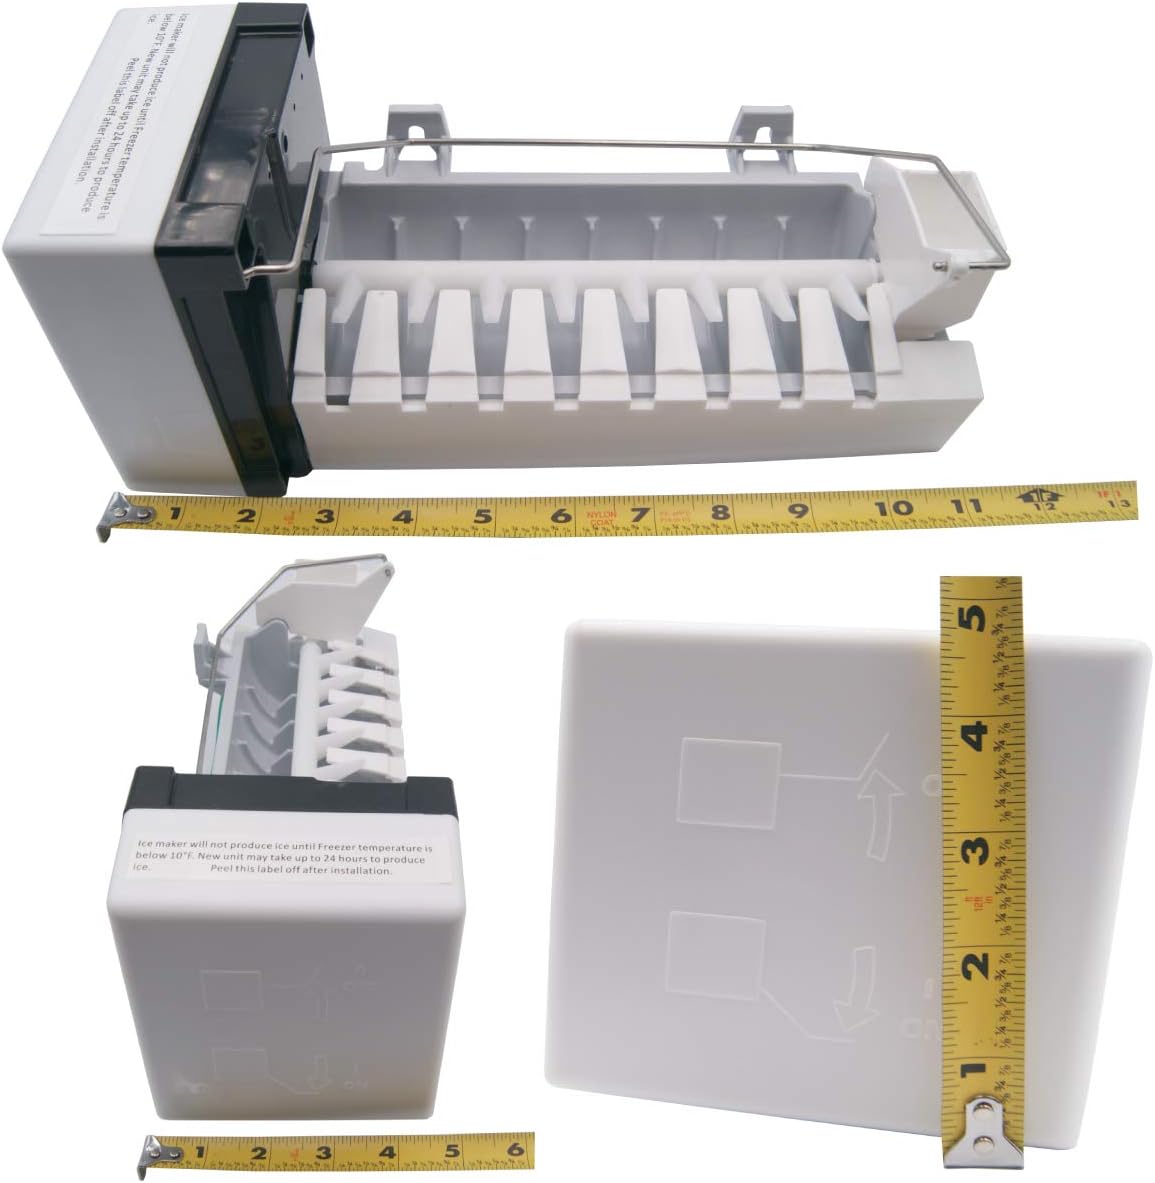 Supplying Demand W10715708 Refrigerator Ice Maker Kit Replaces 8560, WPW10715708